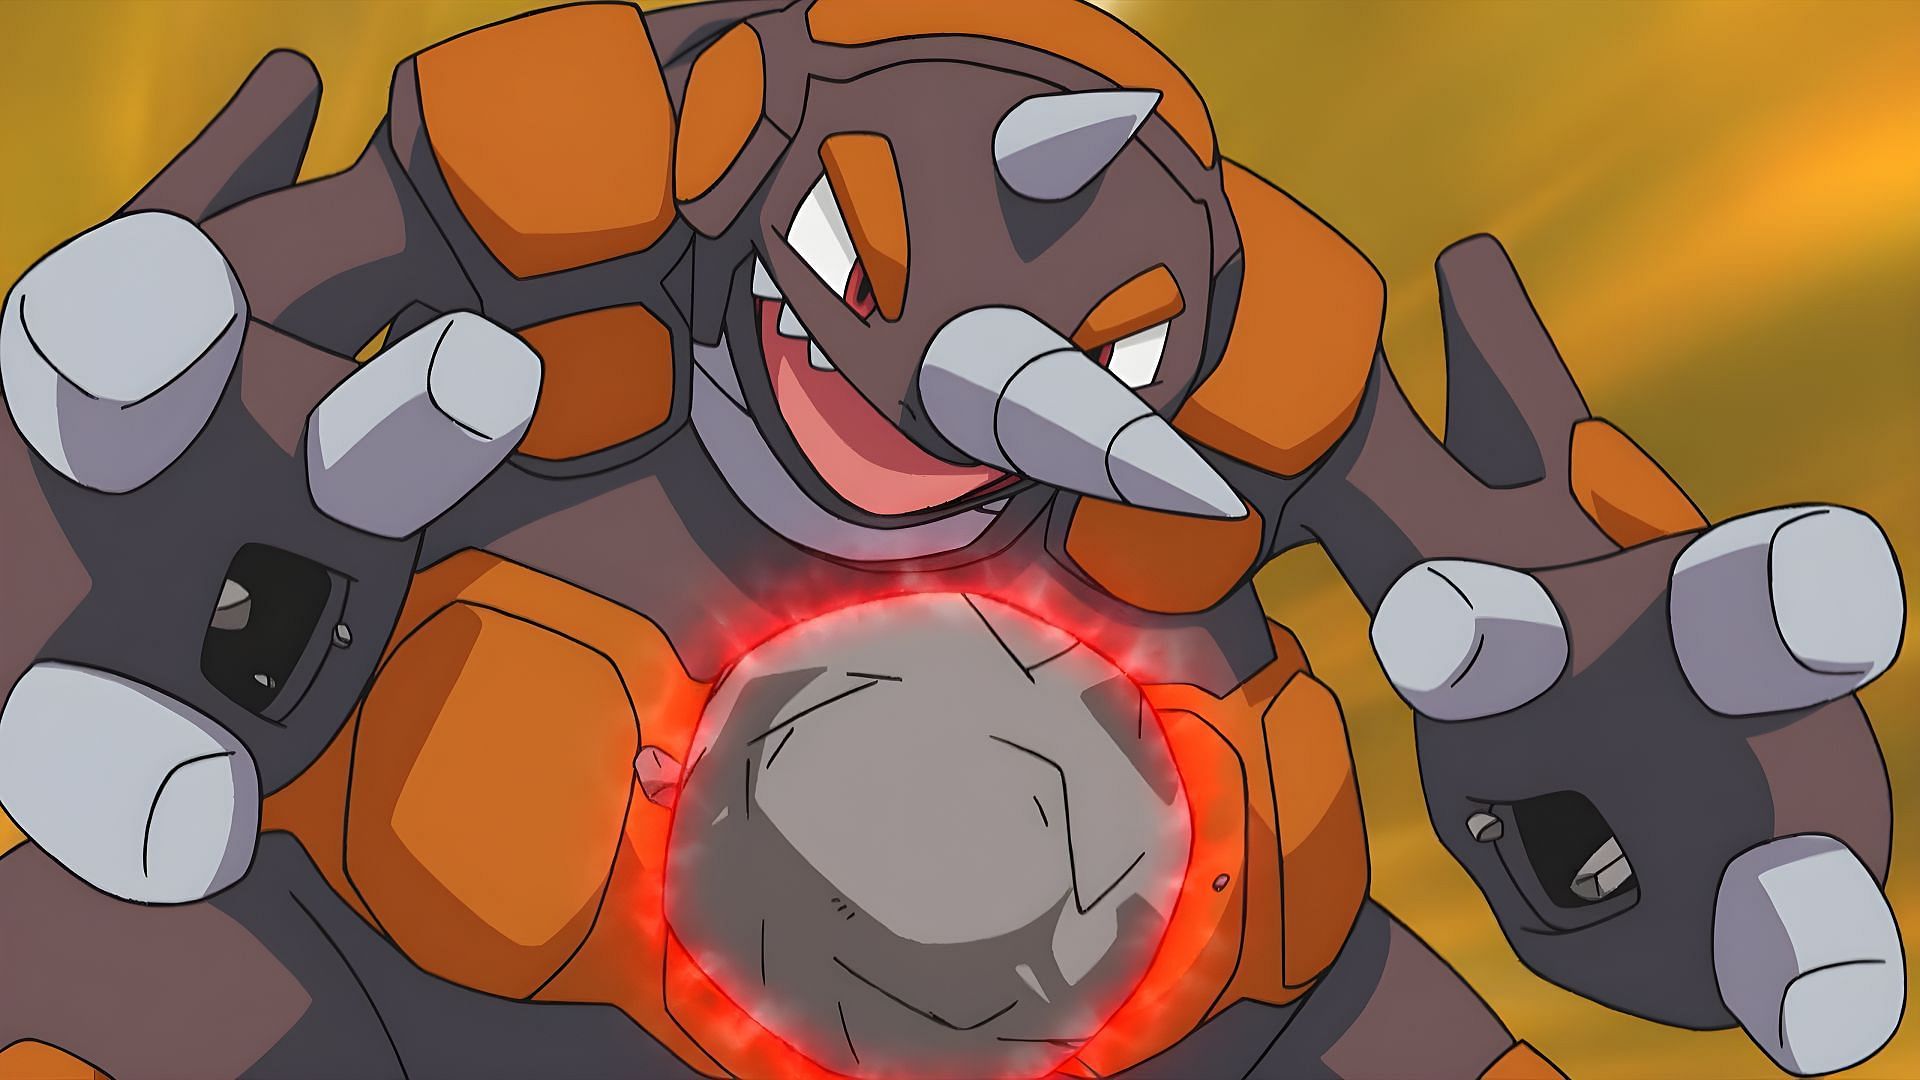 Rhyperior can counter multiple Grunt teams in Pokemon GO (Image via The Pokemon Company)